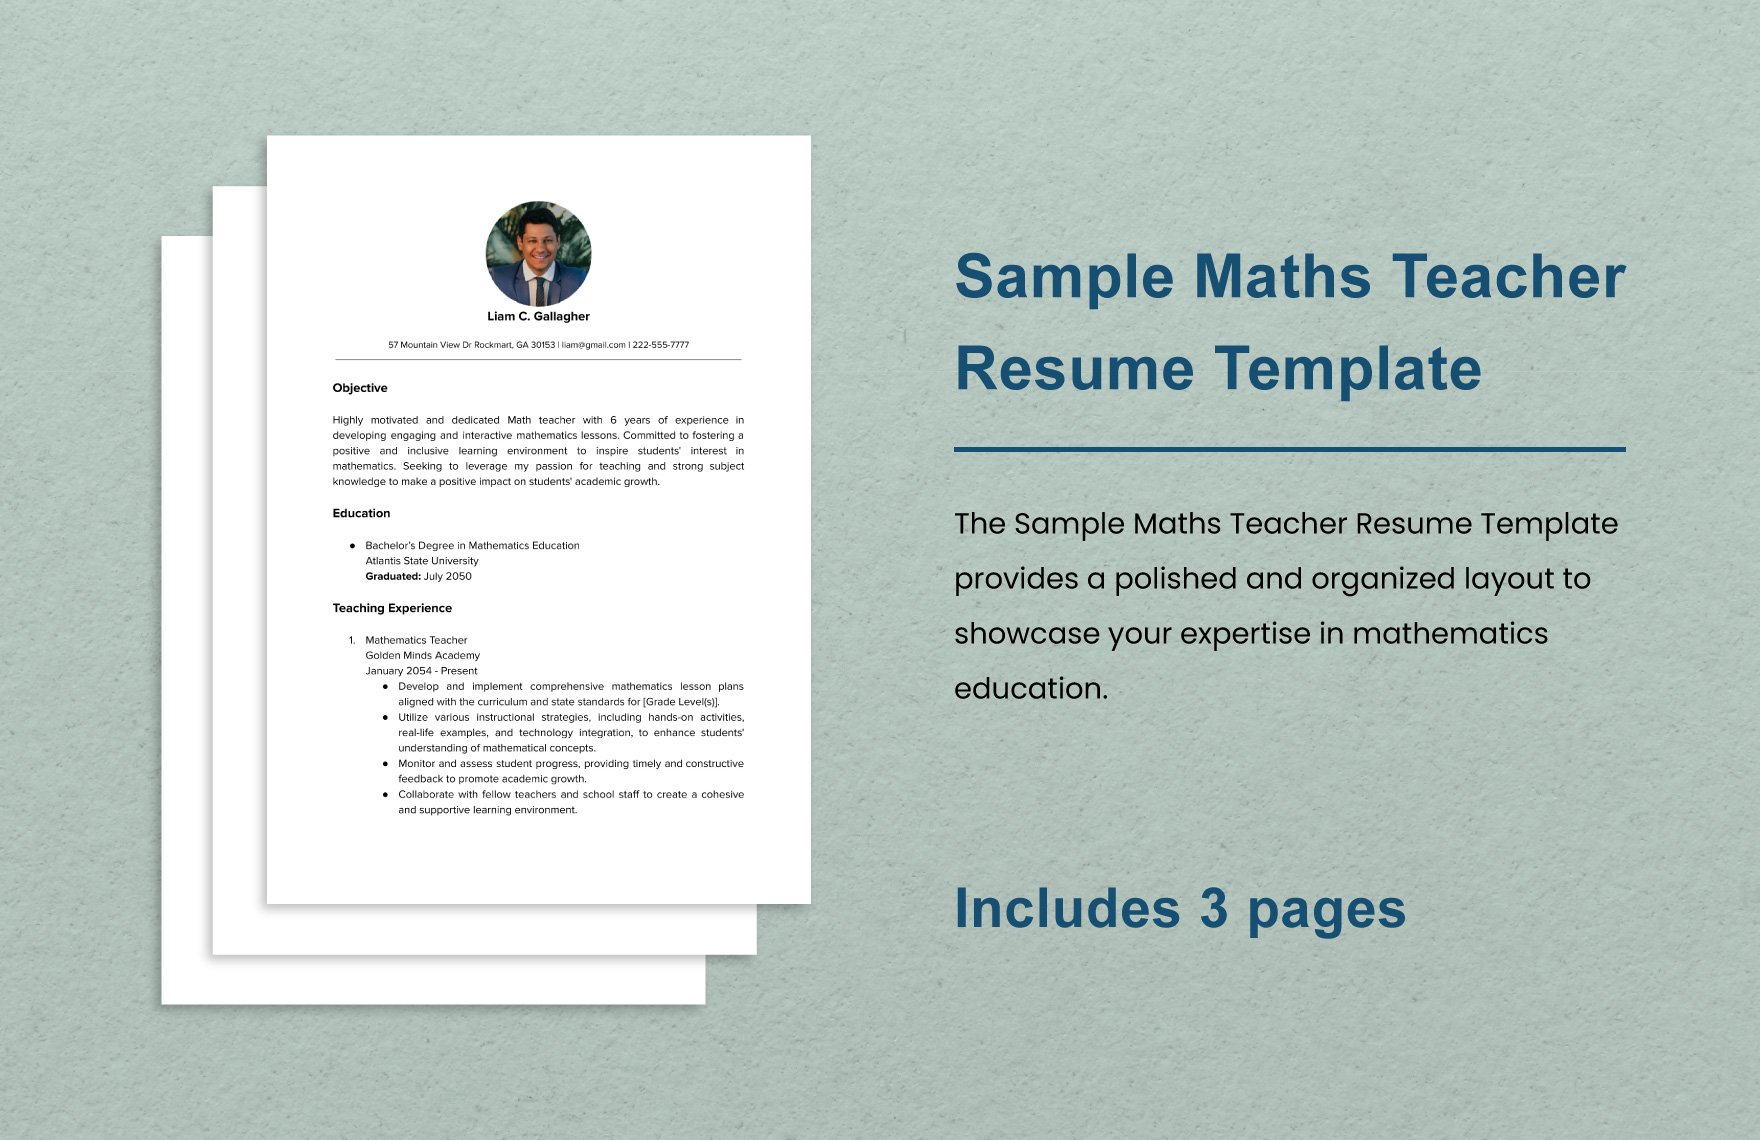 Sample Maths Teacher Resume Template